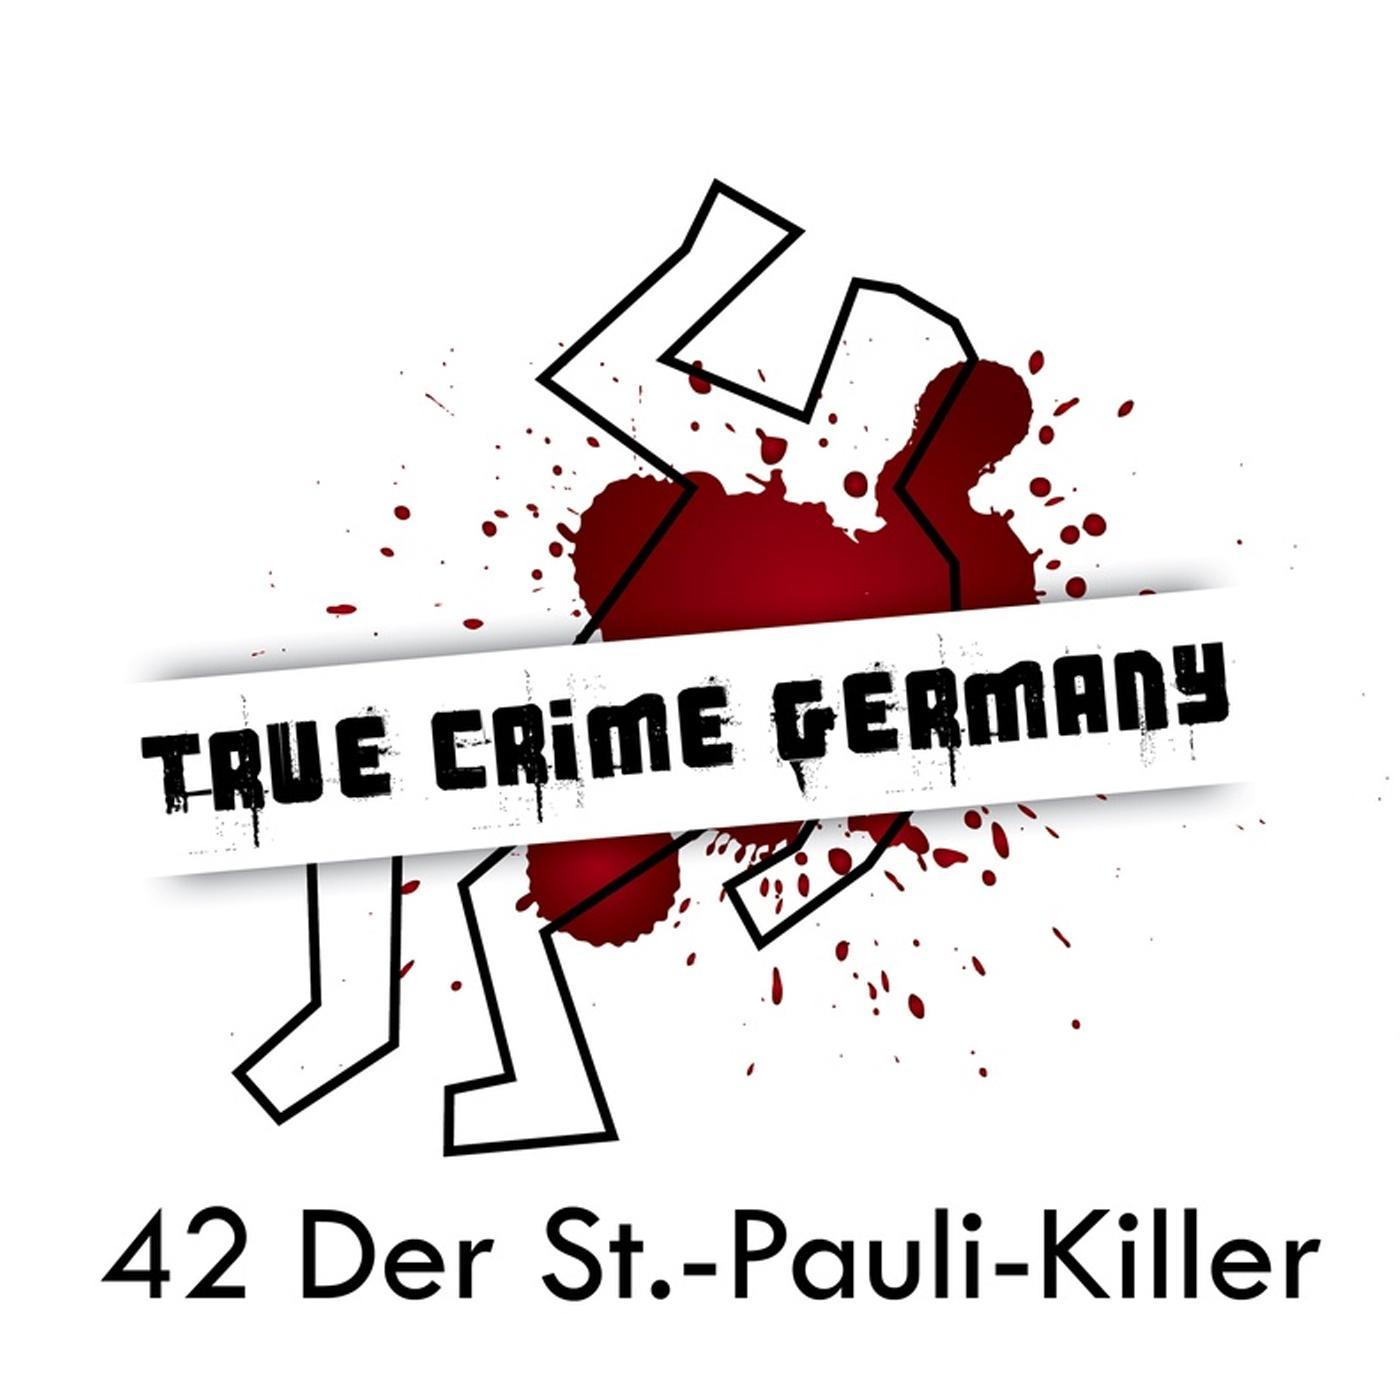 #42 Der St.-Pauli-Killer